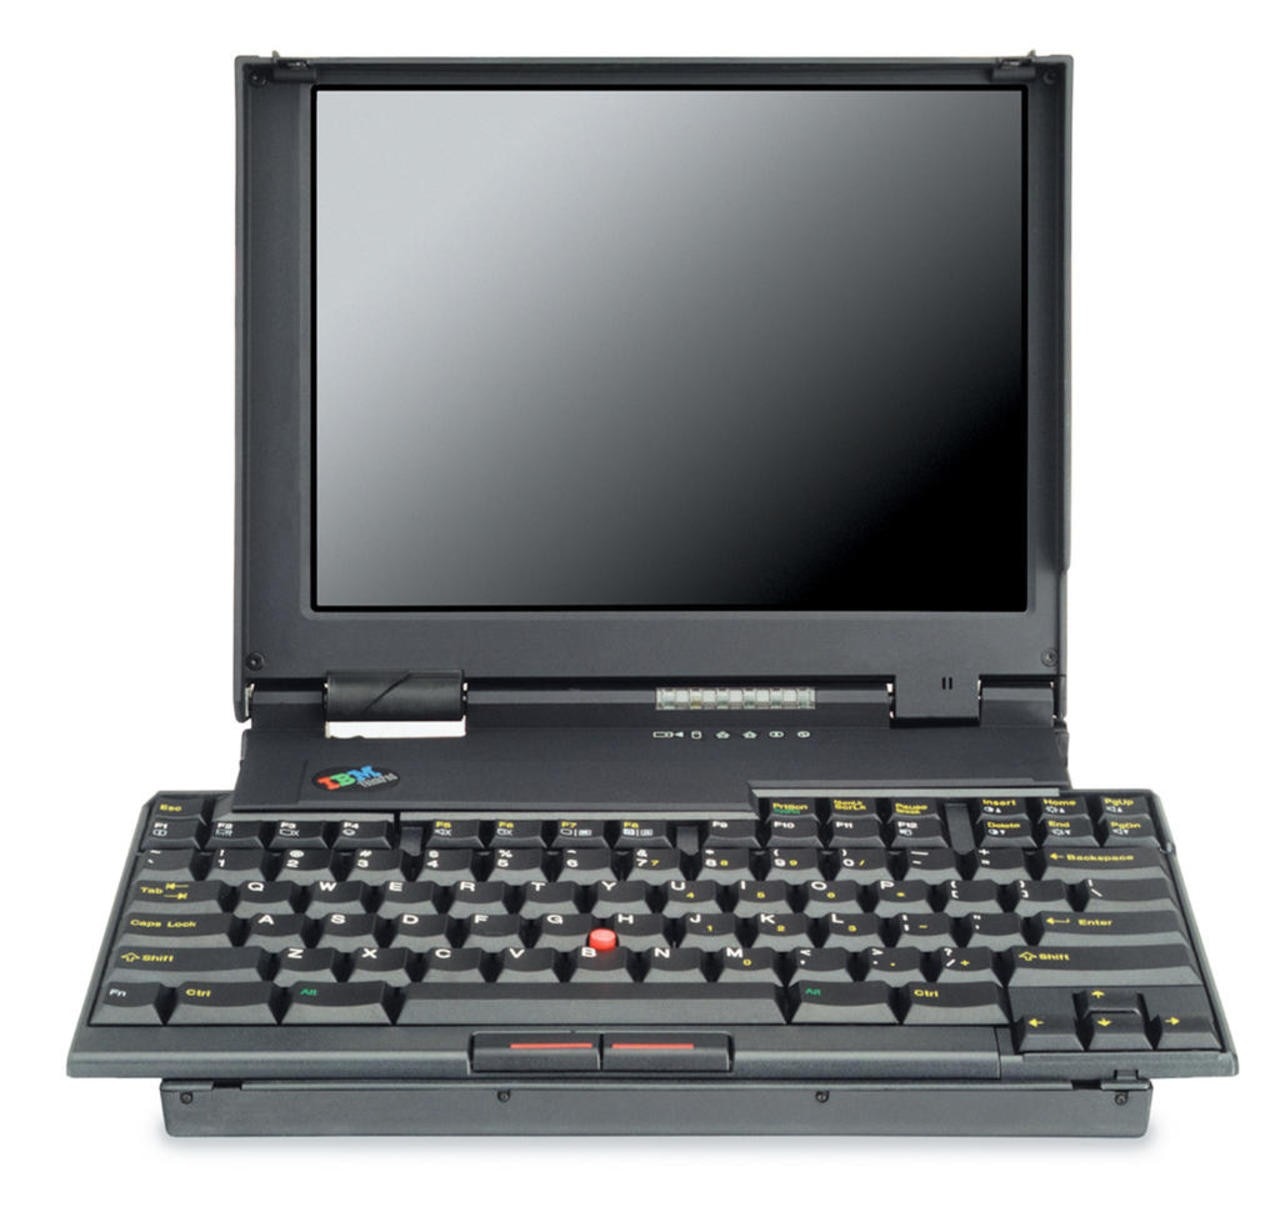 IBM Thinkpad 701C, the 1995 “butterfly” laptop - Domus